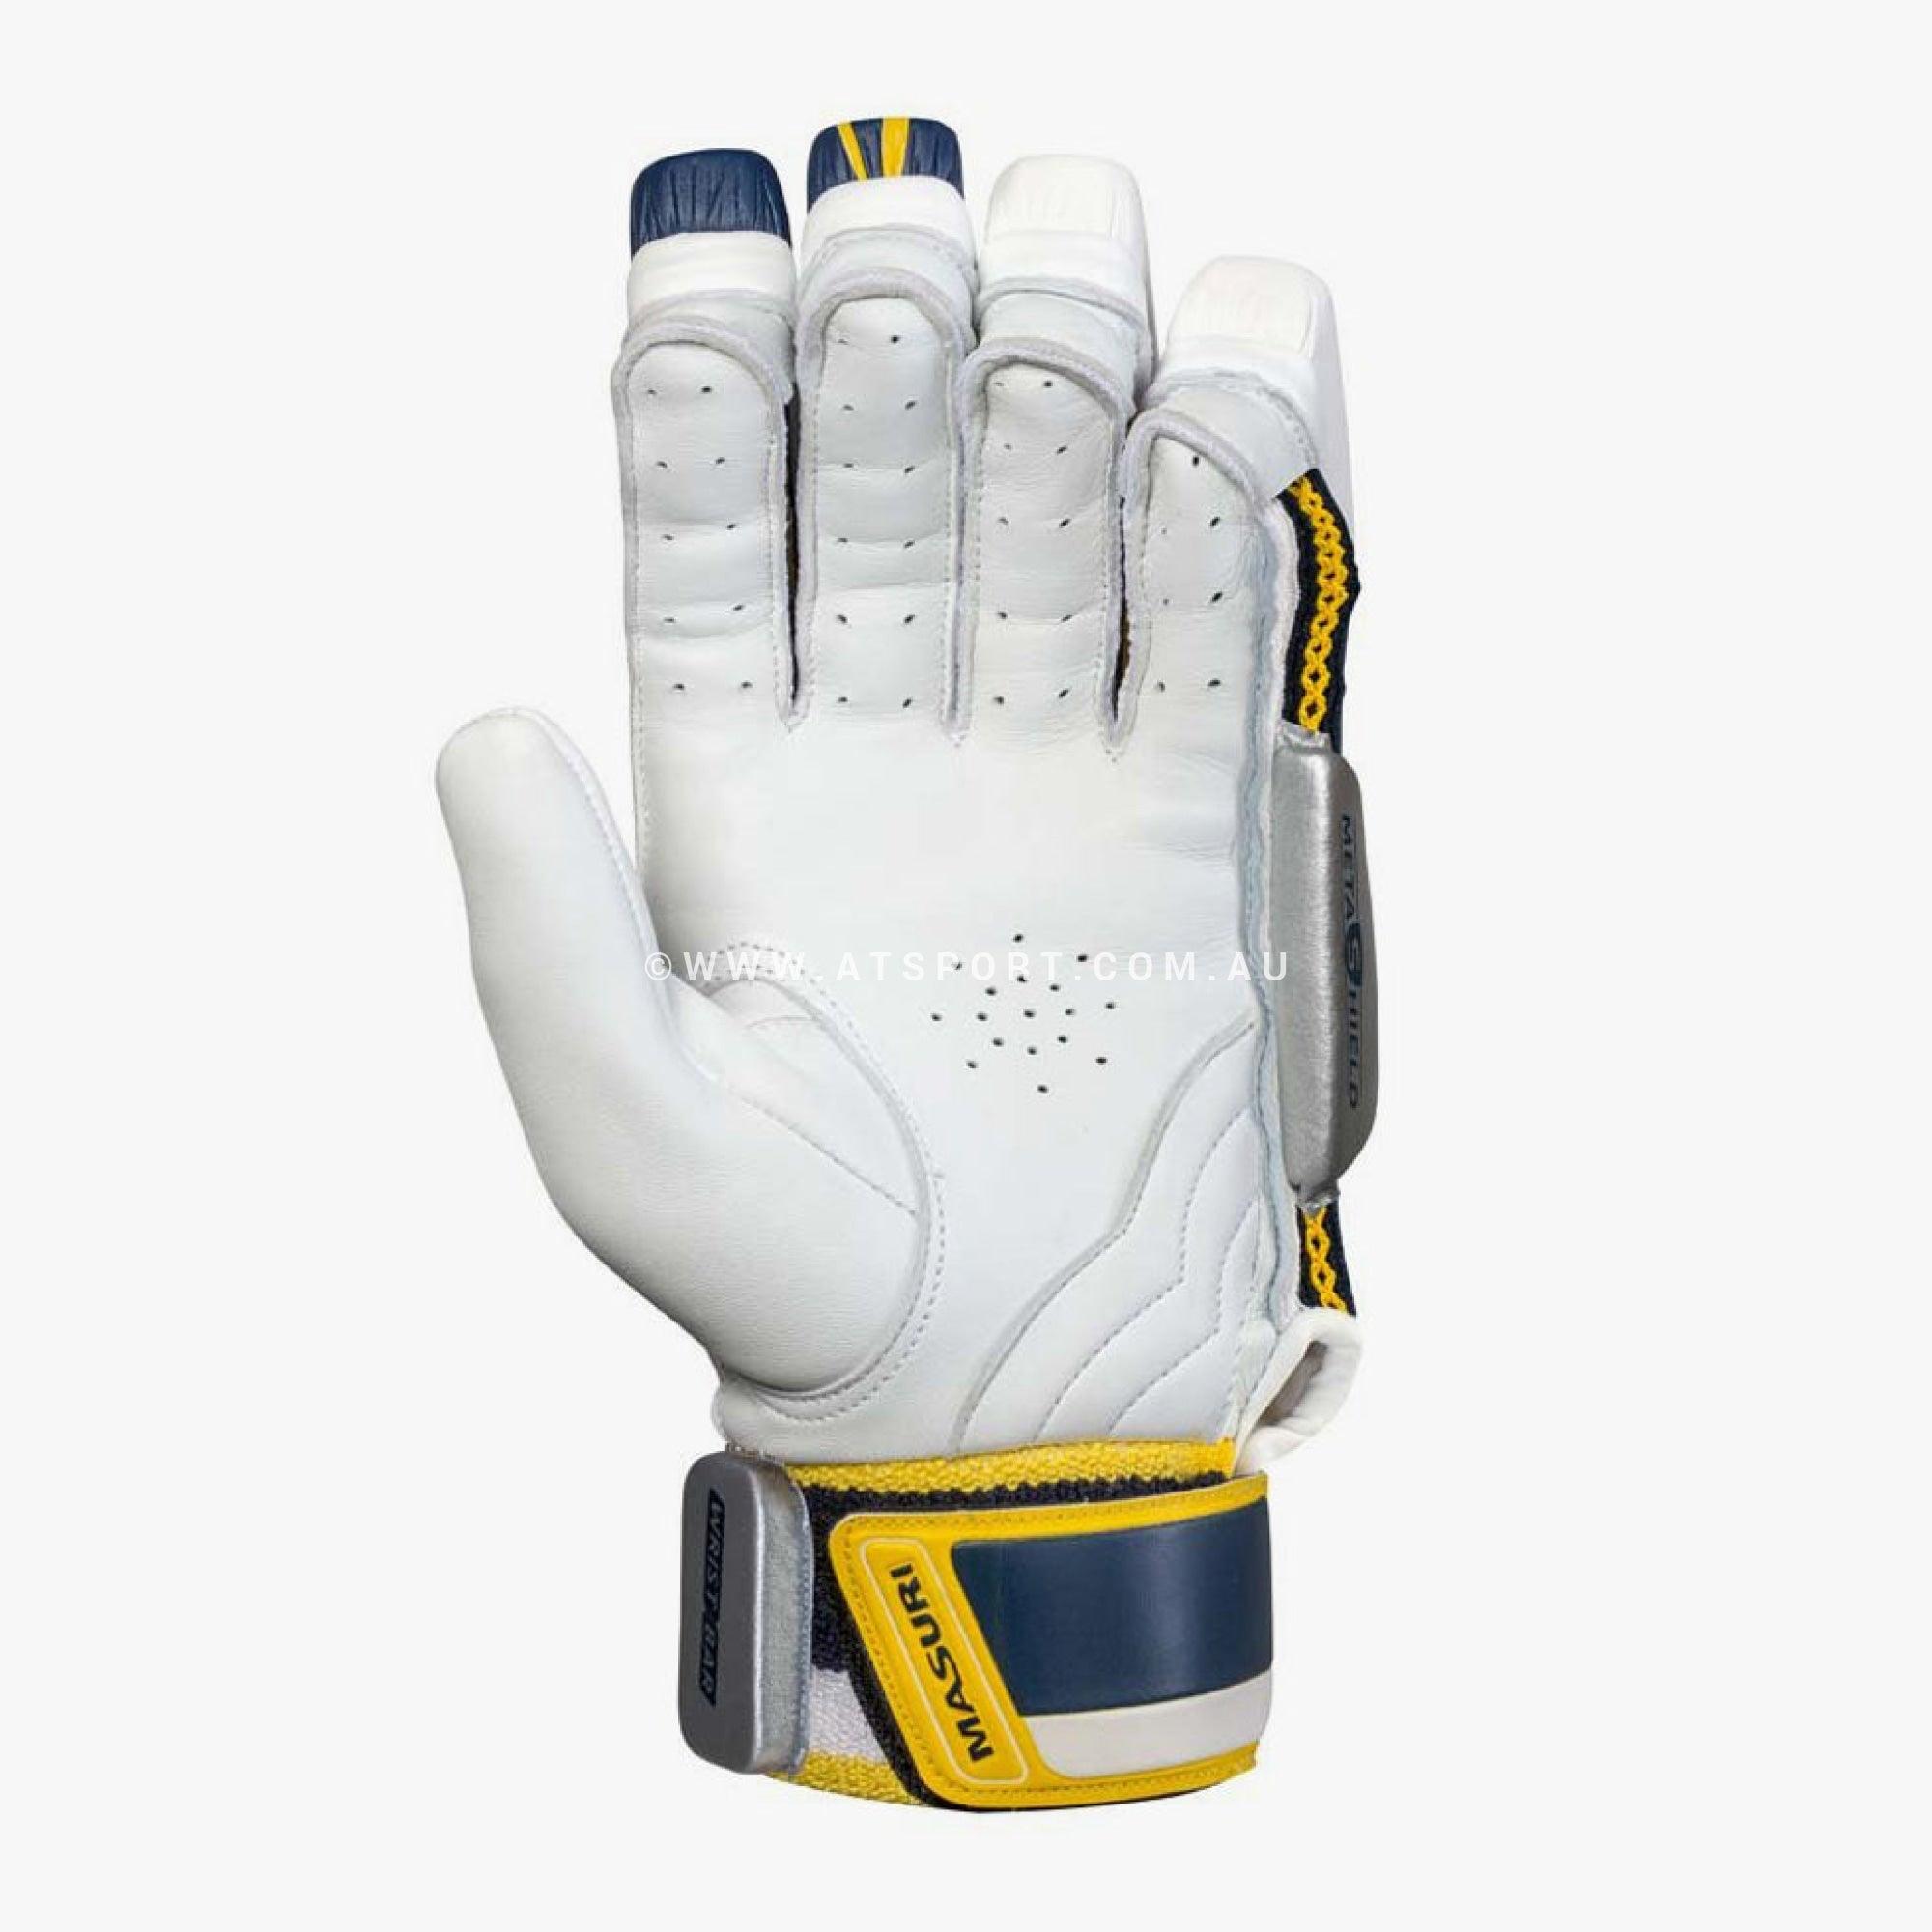 Masuri E LINE Cricket Batting Gloves - SMALL ADULT - AT Sports